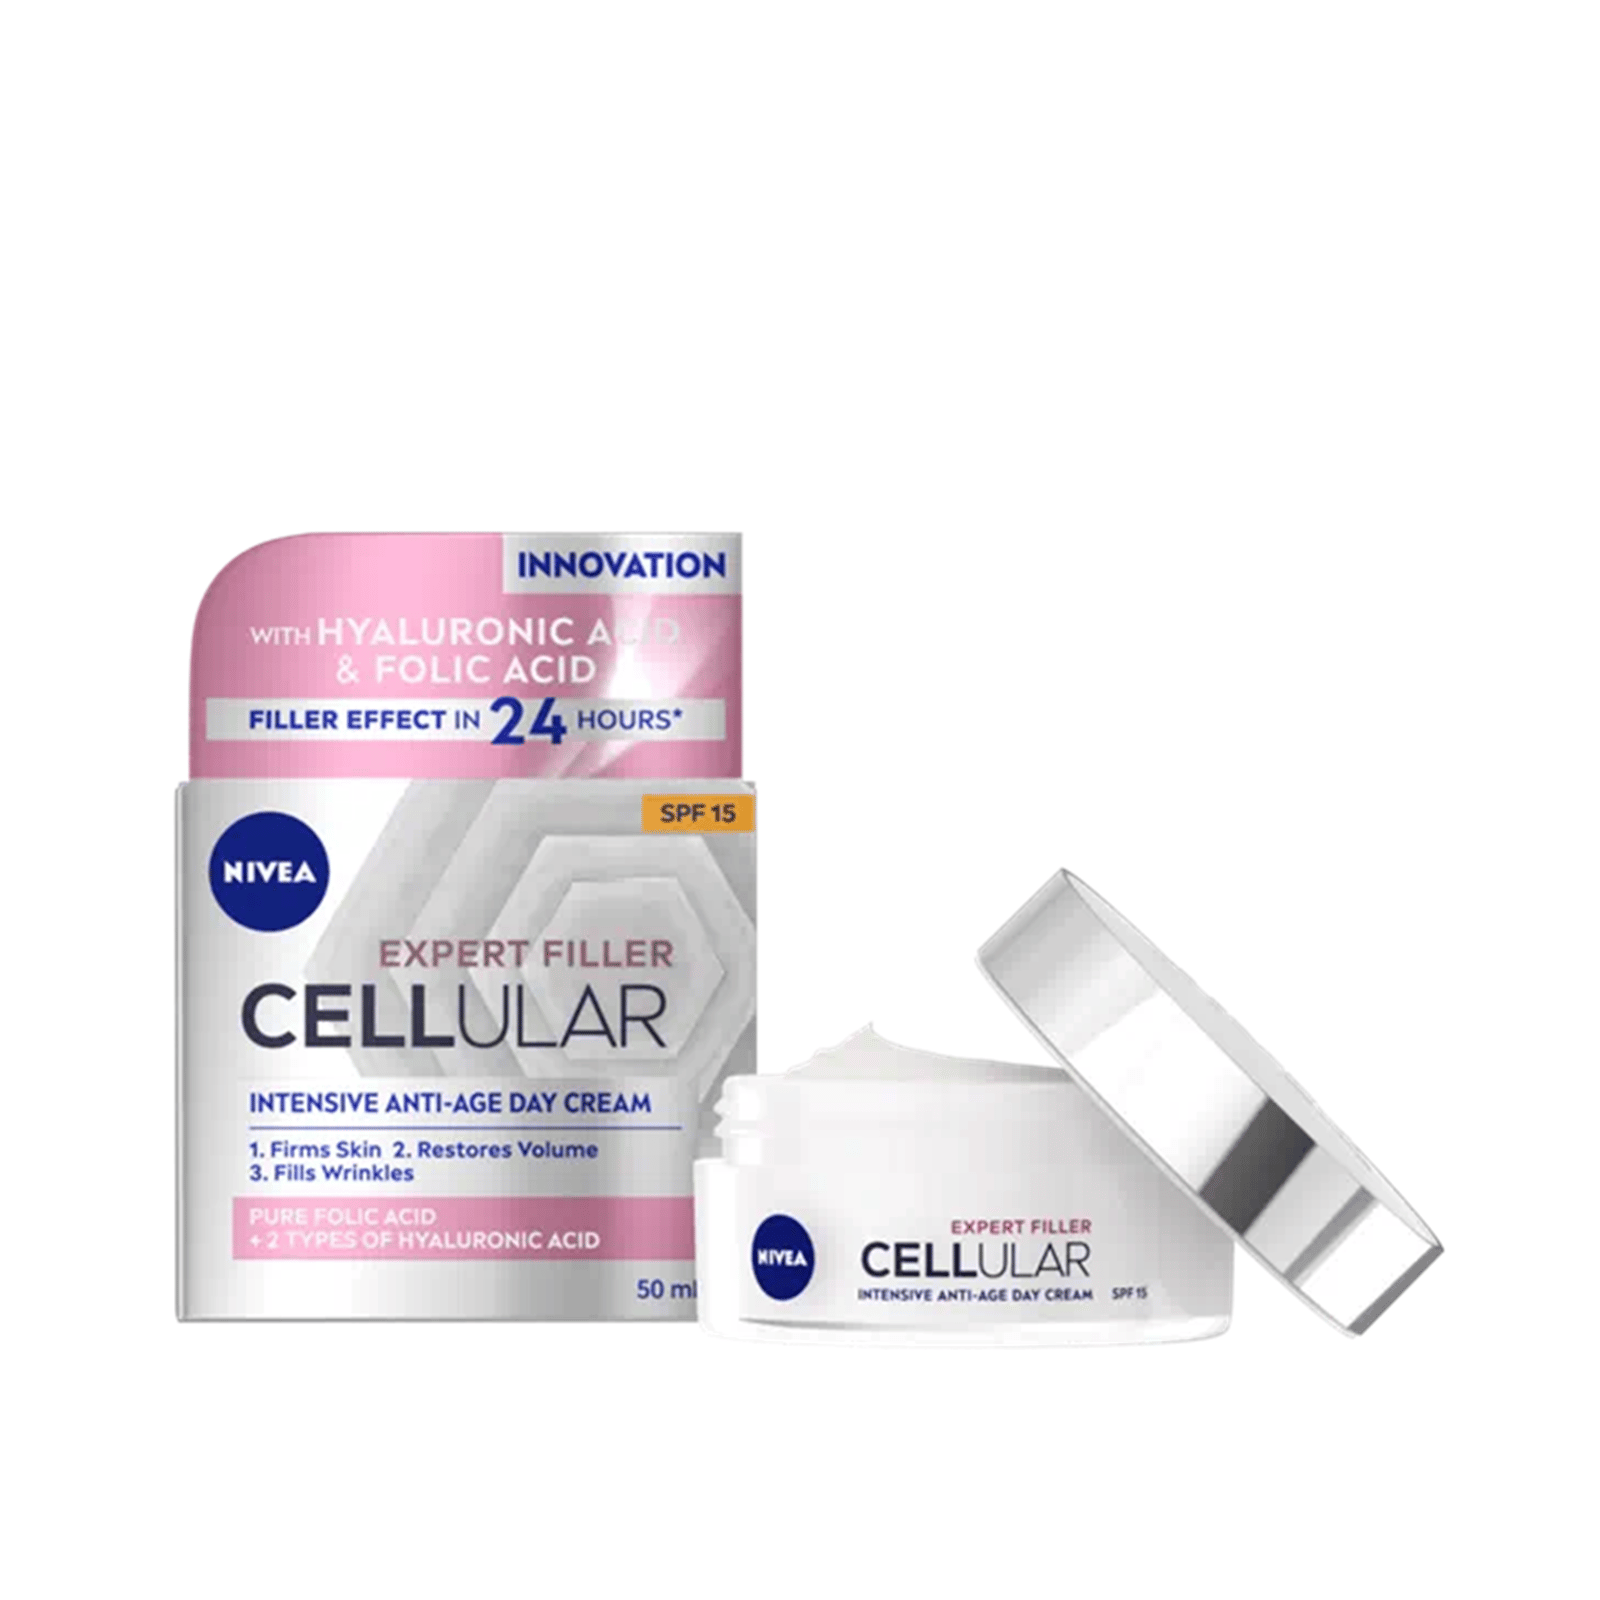 Nivea Expert Filler Cellular Intensive Anti-Age Day Cream SPF15 50ml (1.69fl oz)